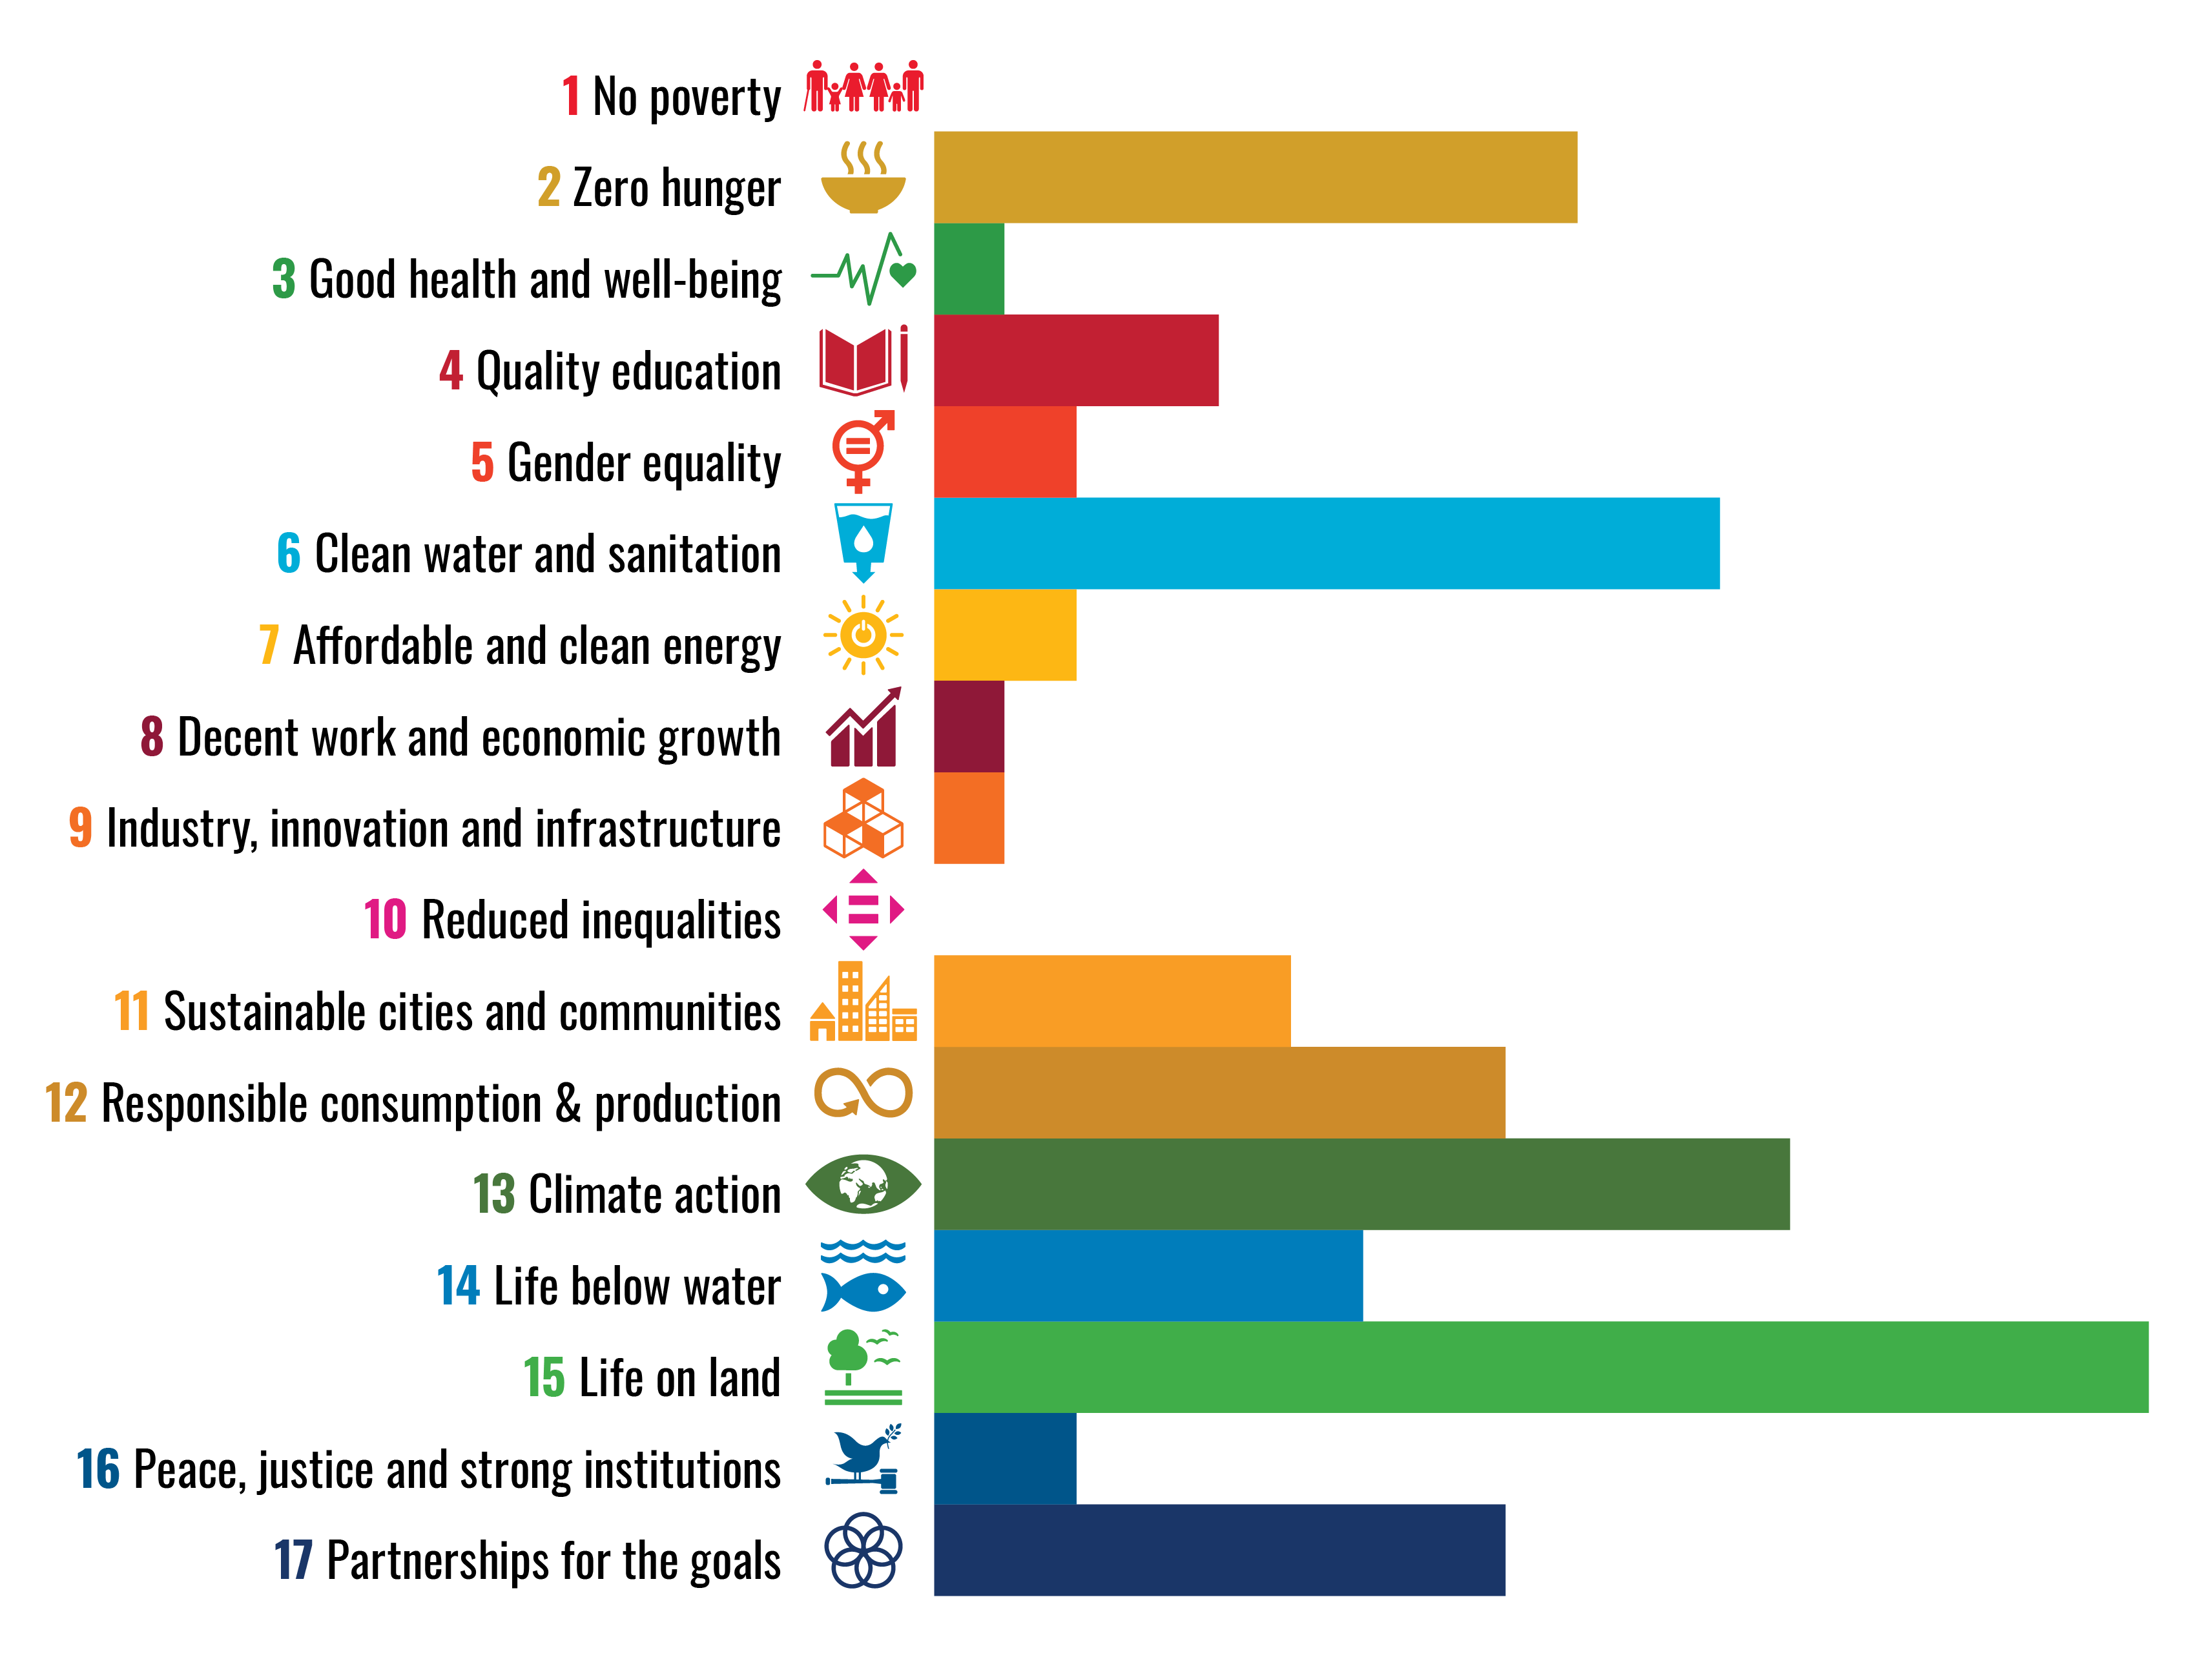 Figure: SDGs Scores